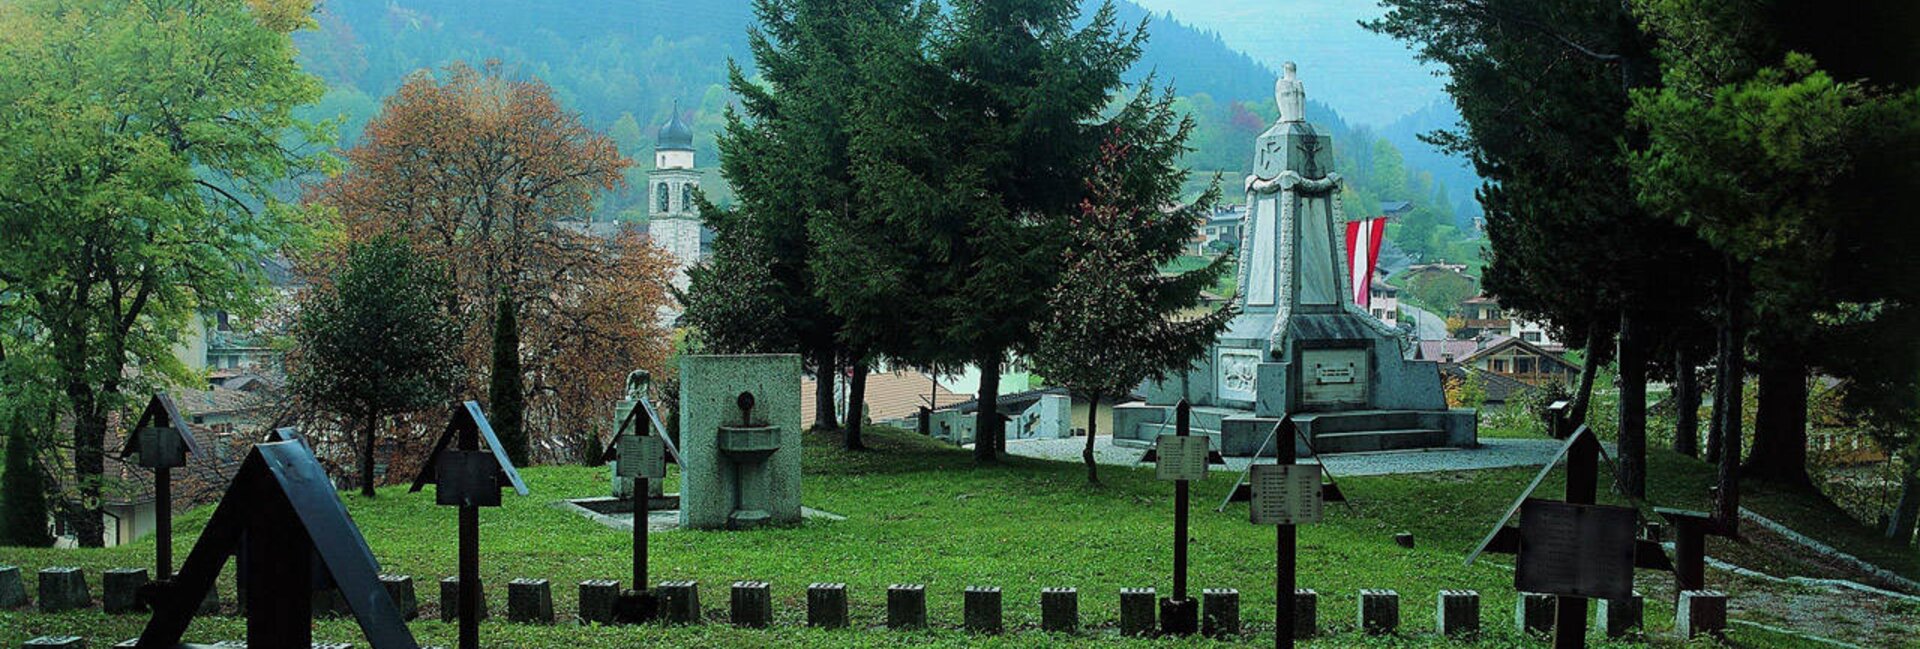 The Austro-Hungarian monumental cemetery in Bondo